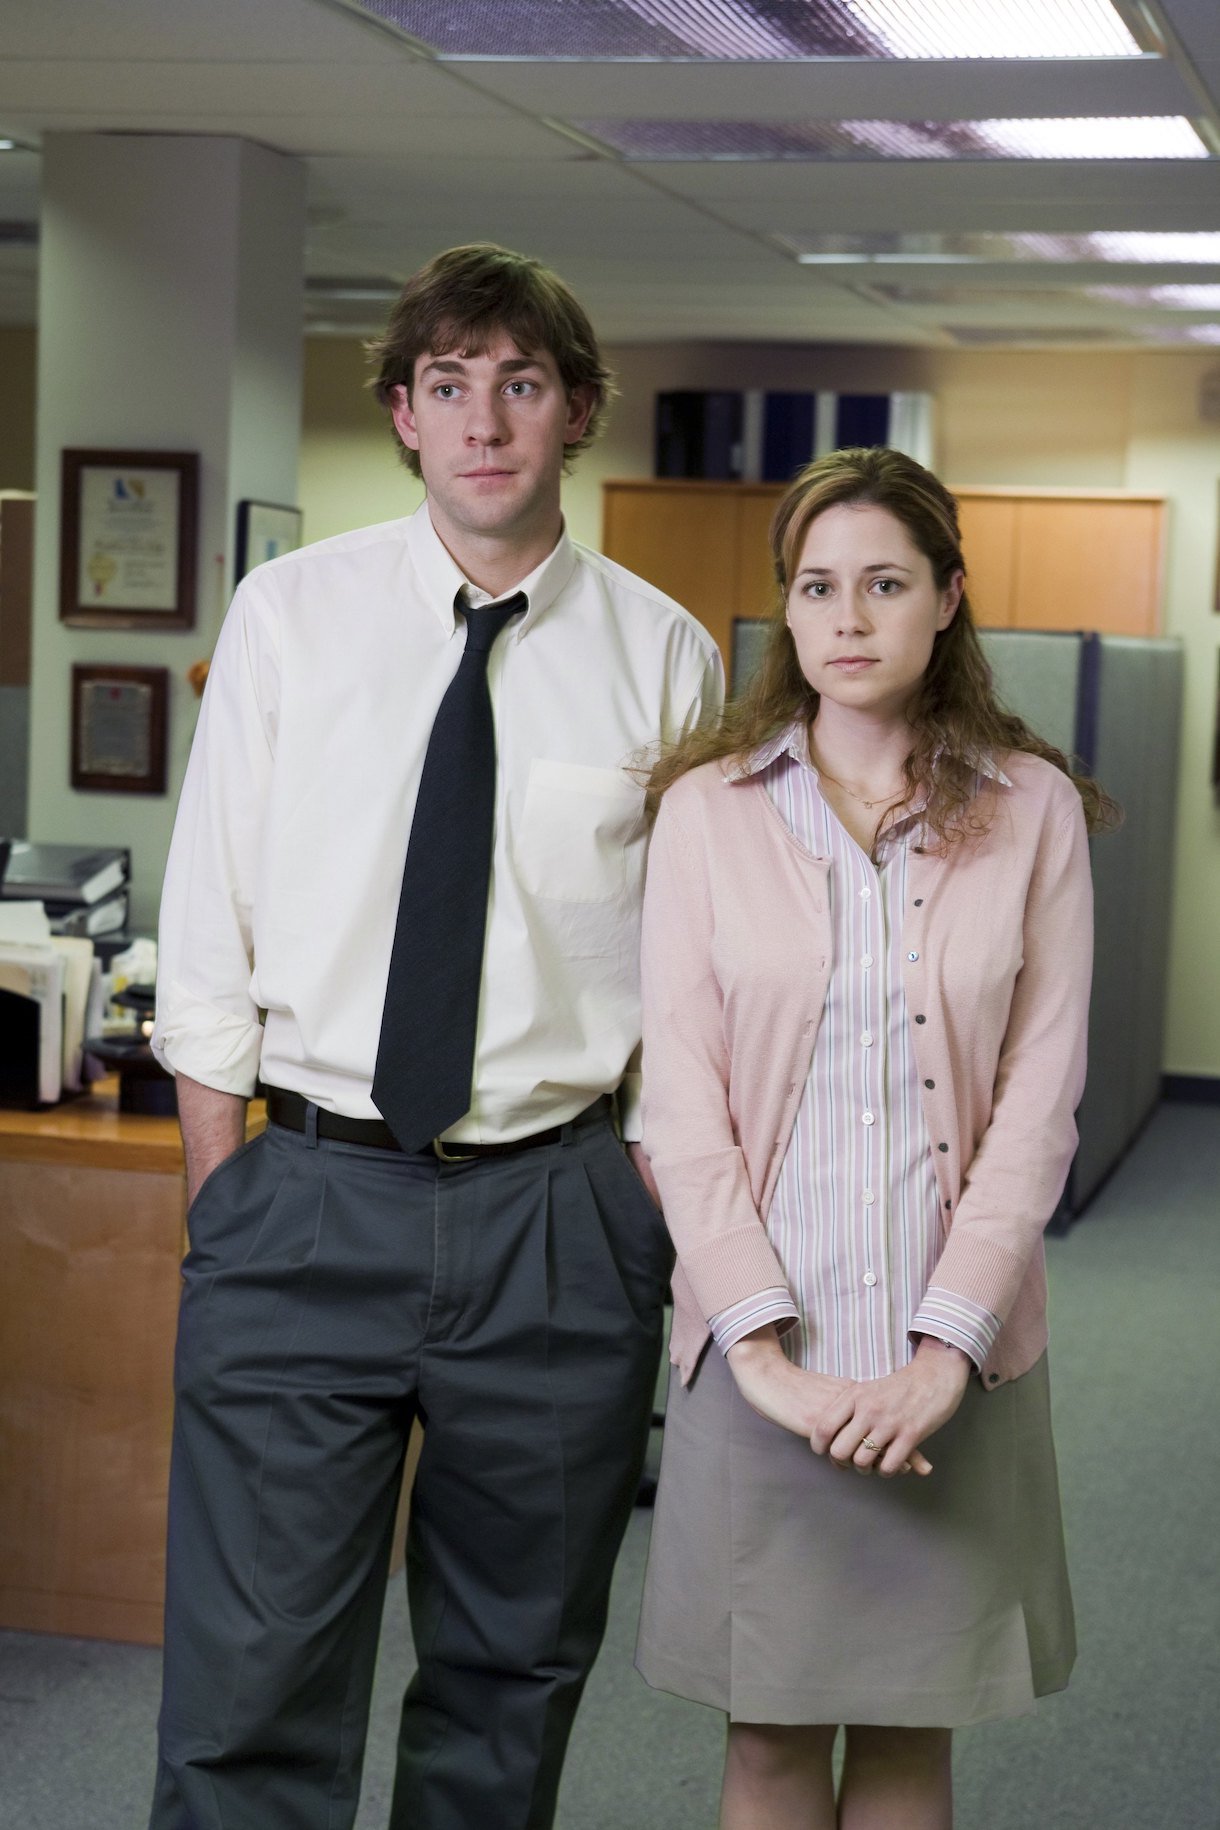 The Office 'Valentine's Day' Episode, starring John Krasinski as Jim Halpert and Jenna Fischer as Pam Beesly